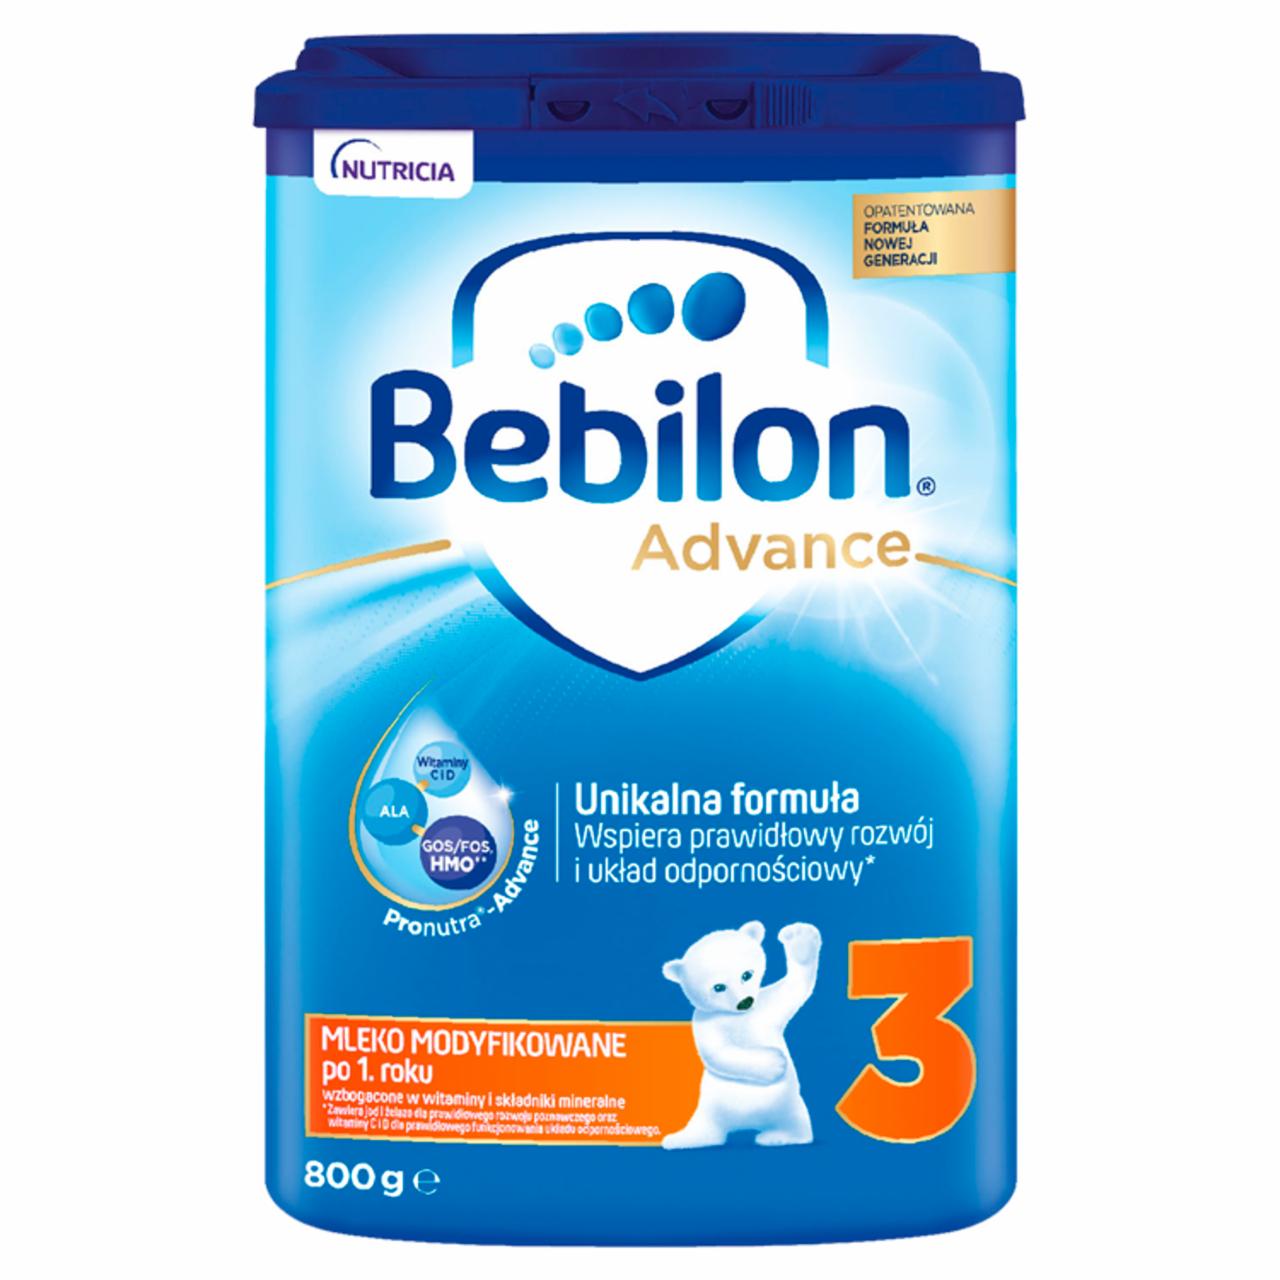 Zdjęcia - Bebilon 3 Advance Pronutra Junior Formuła na bazie mleka po 1. roku życia 800 g